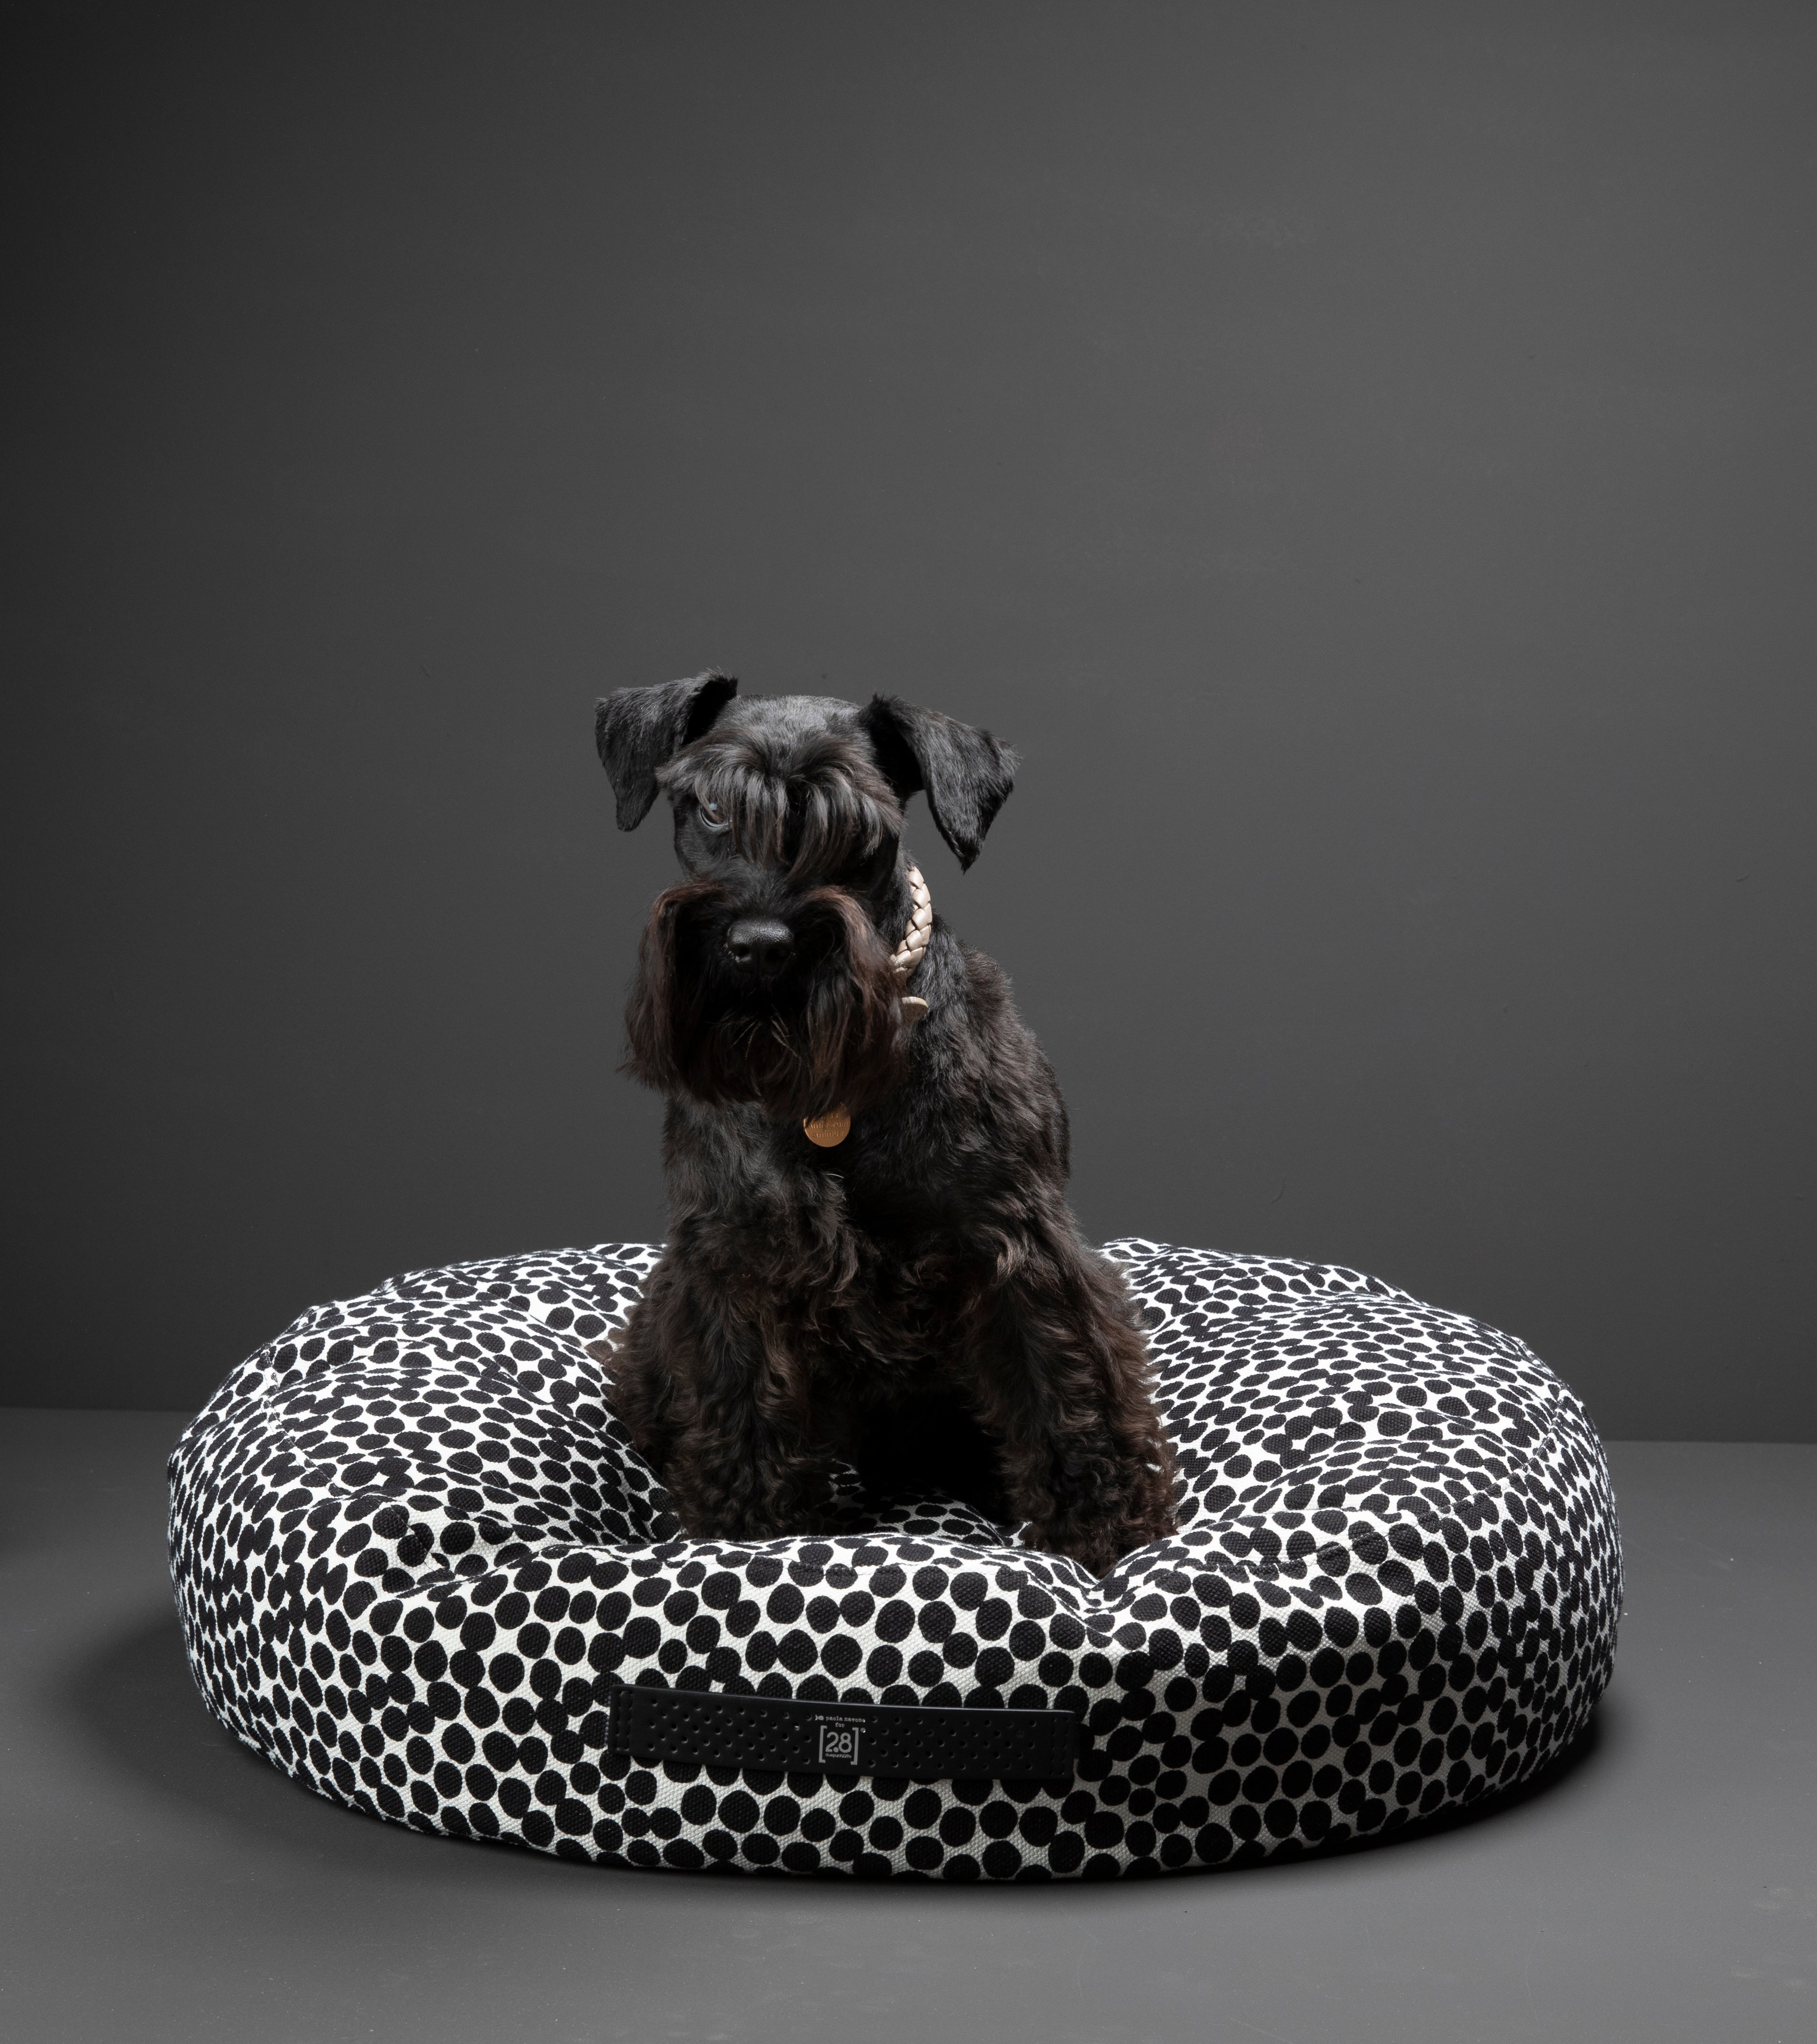 dotto-collection-paola-navone-dog-cushion-2.jpg